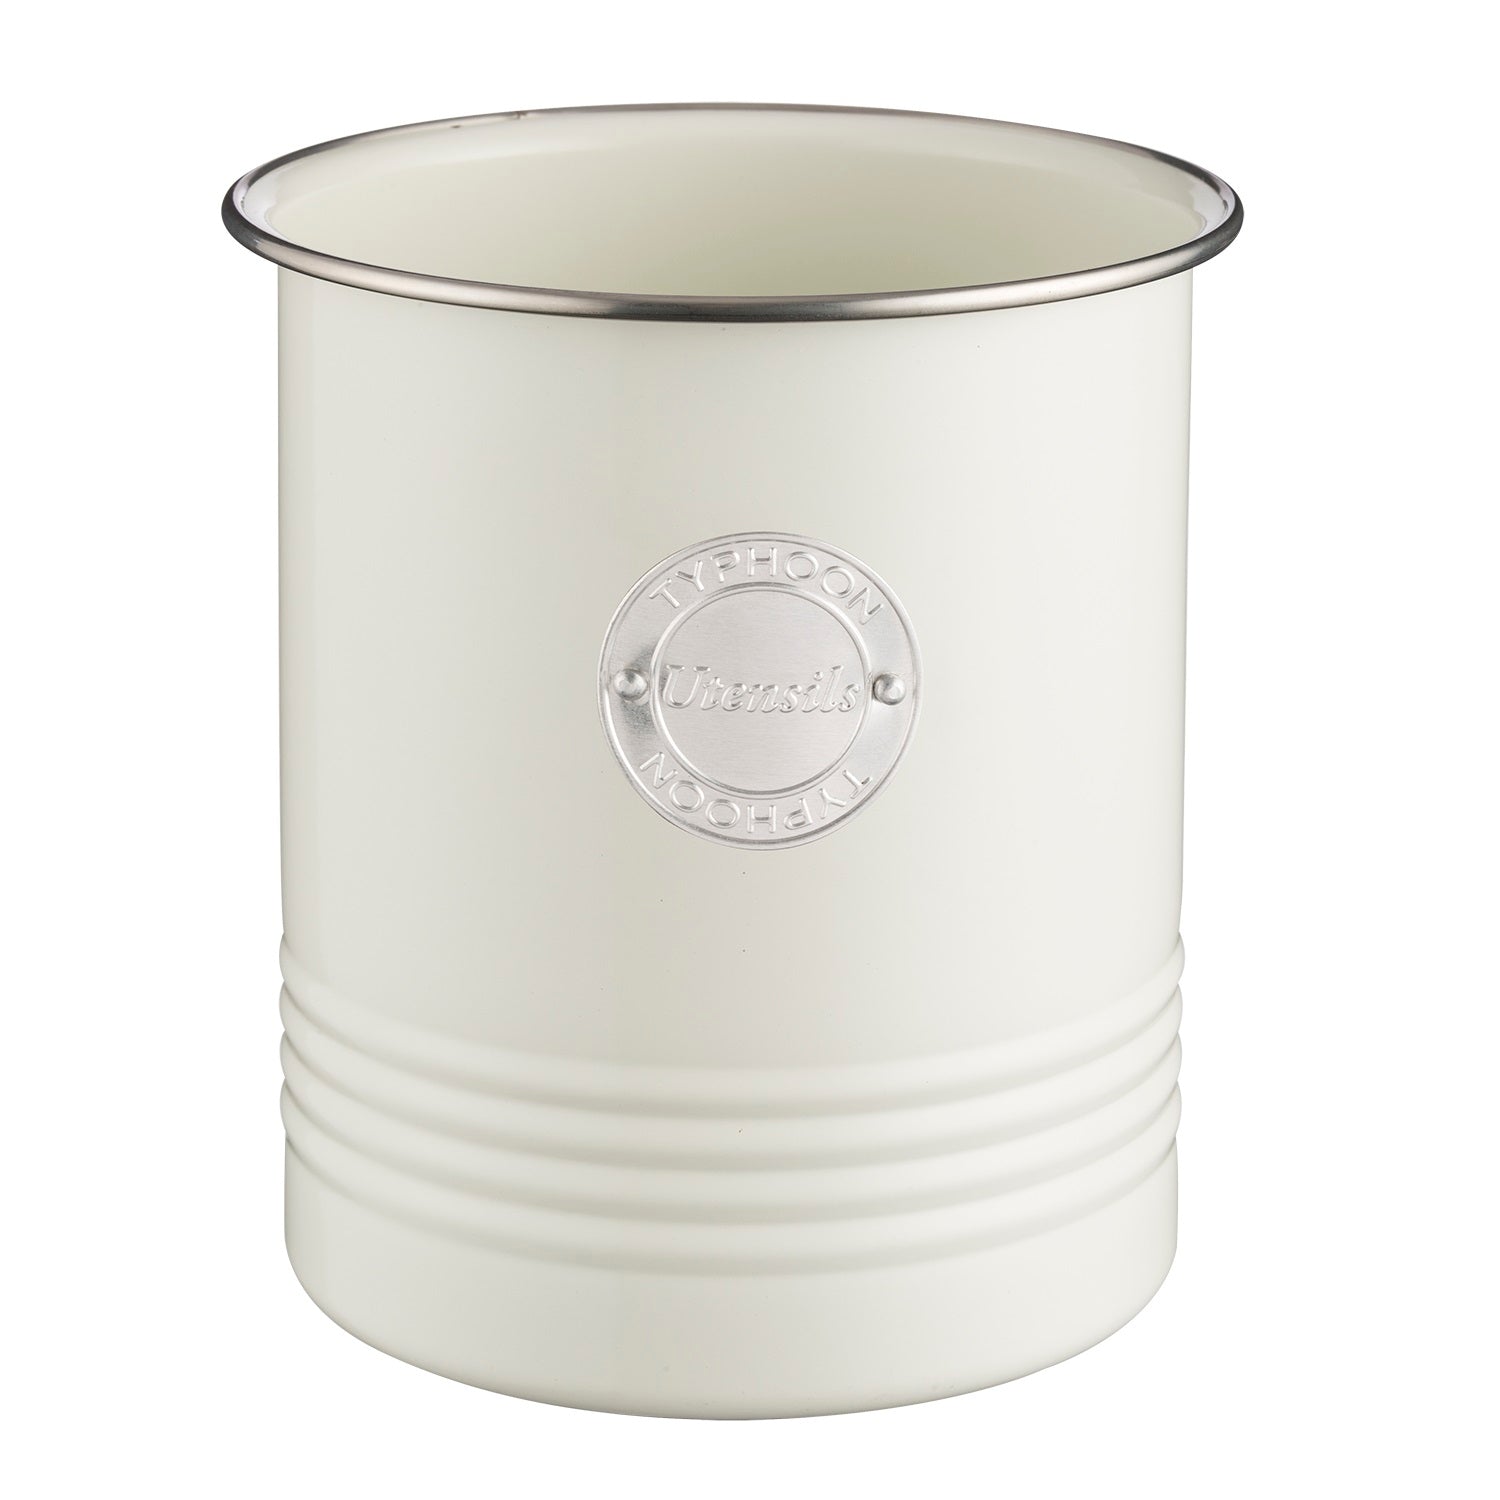 Typhoon 1401.743 Living Utensils Pot - Cream - Premium Utensil Holders from Typhoon - Just $8.99! Shop now at W Hurst & Son (IW) Ltd